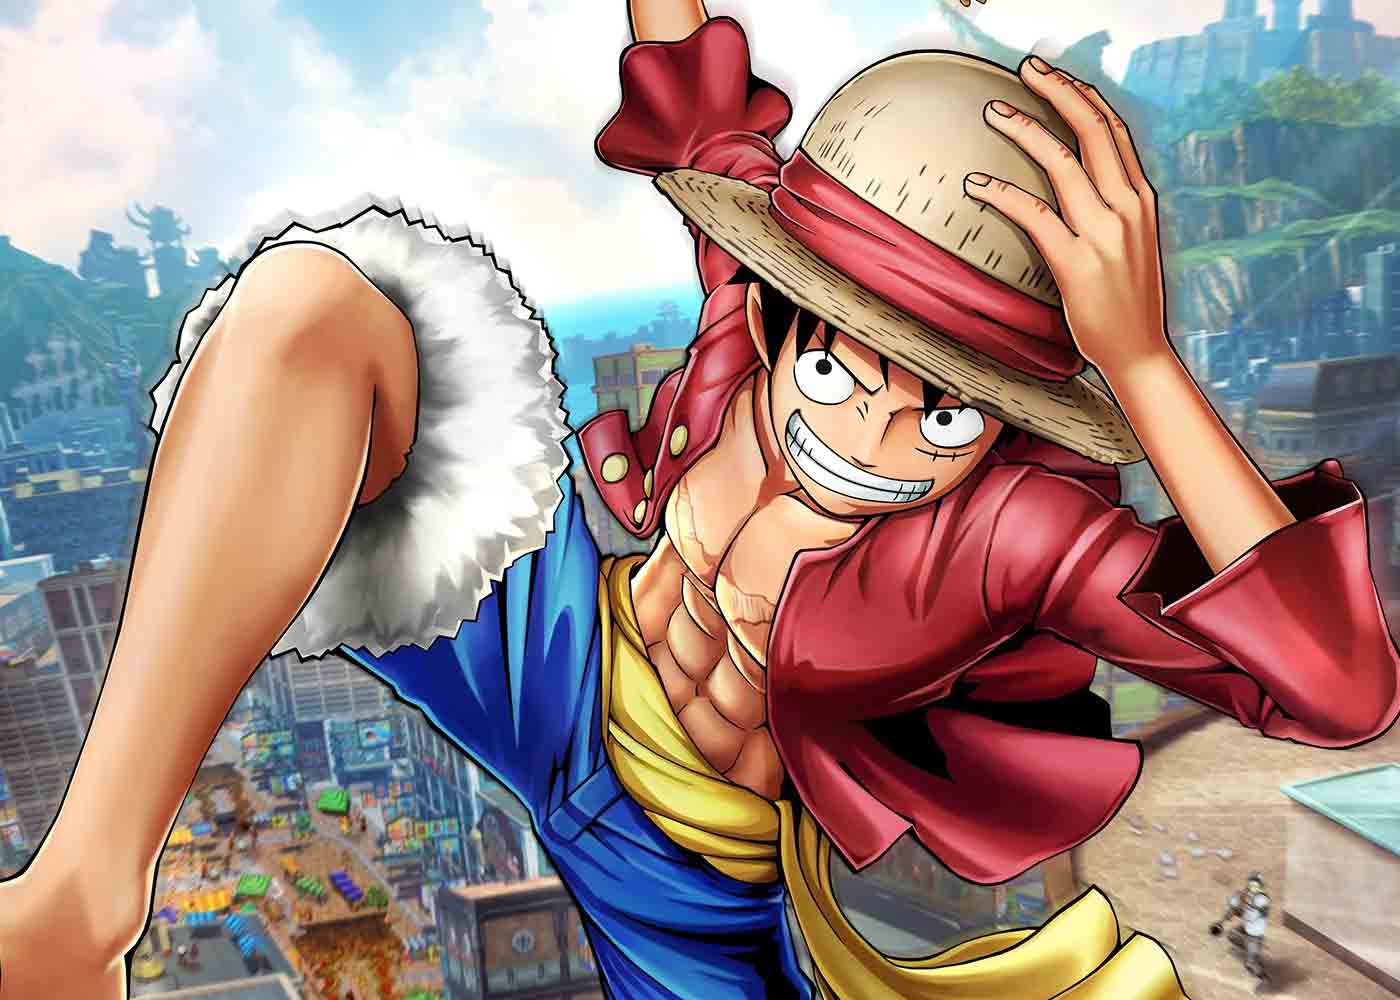 Benarkah Gambar Judul One Piece Mirip Peta Grand Line?